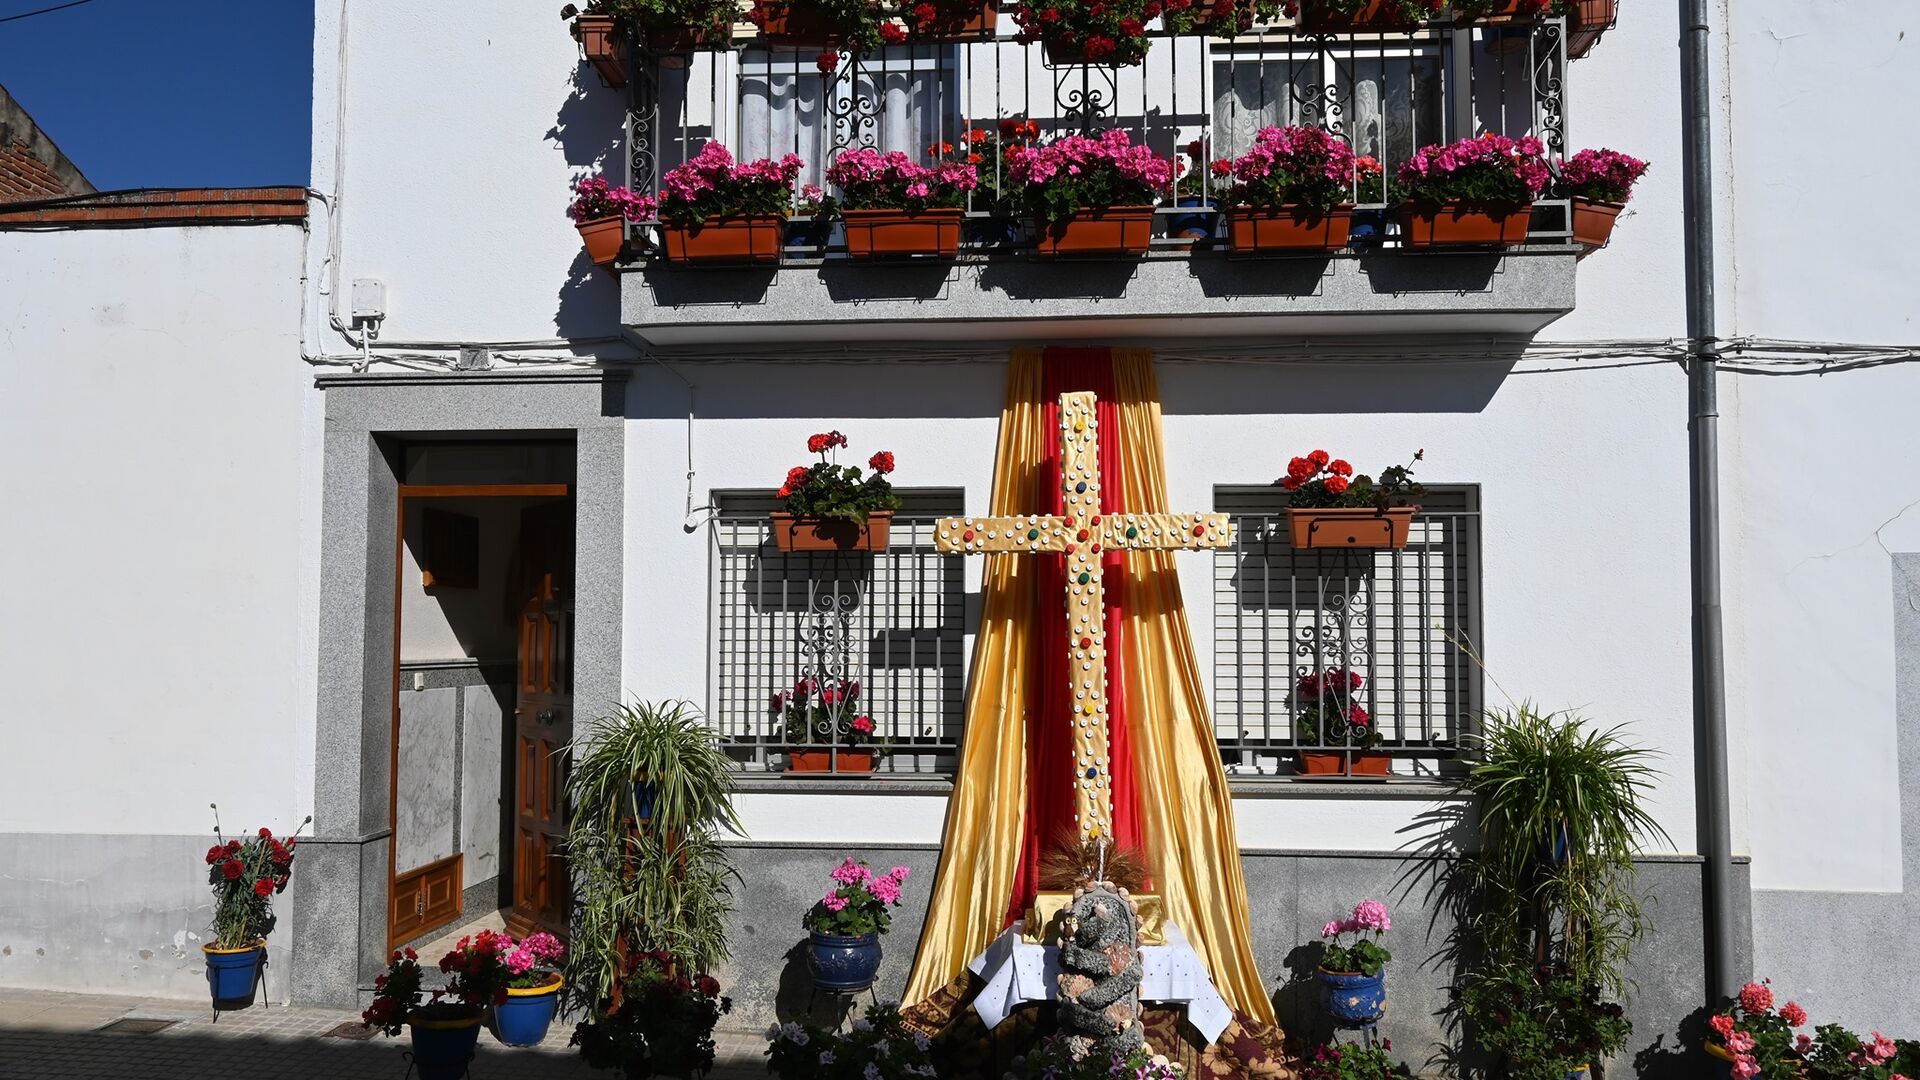 Las Cruces de Mayo de Villanueva de C&oacute;rdoba, en fotograf&iacute;as